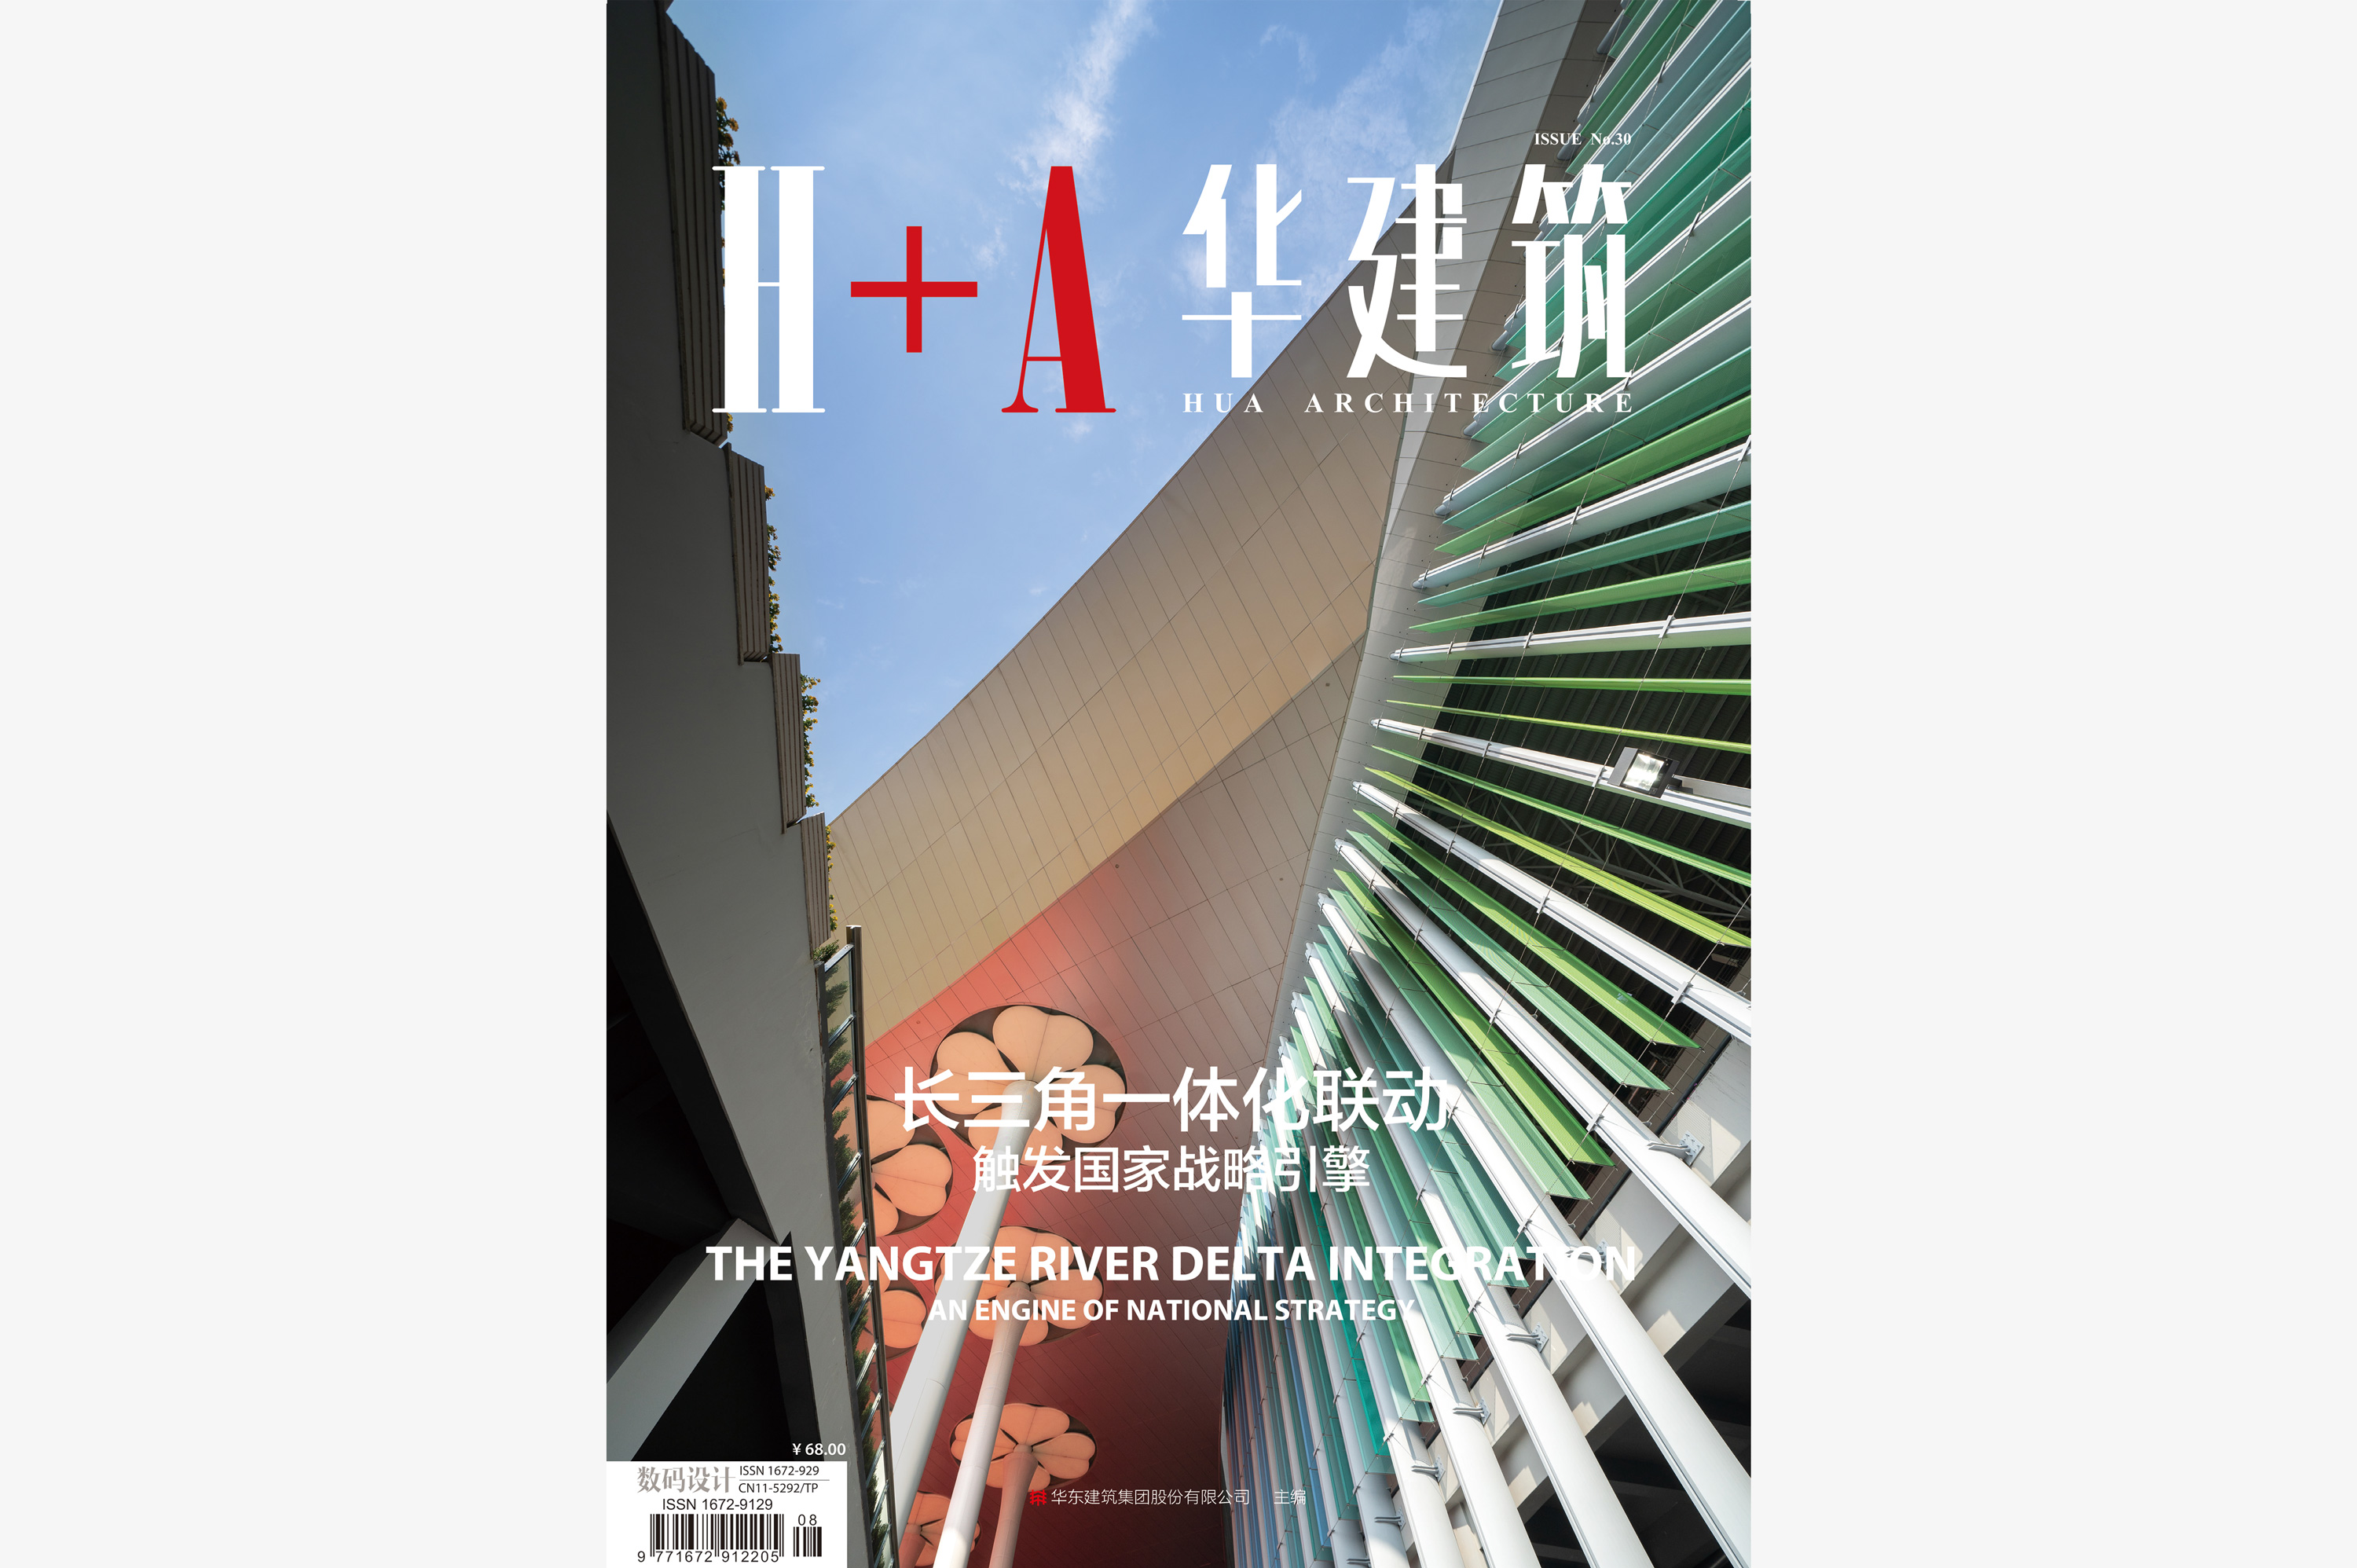 《H+A 华建筑》2020年8月30期-上海虹桥世界中心